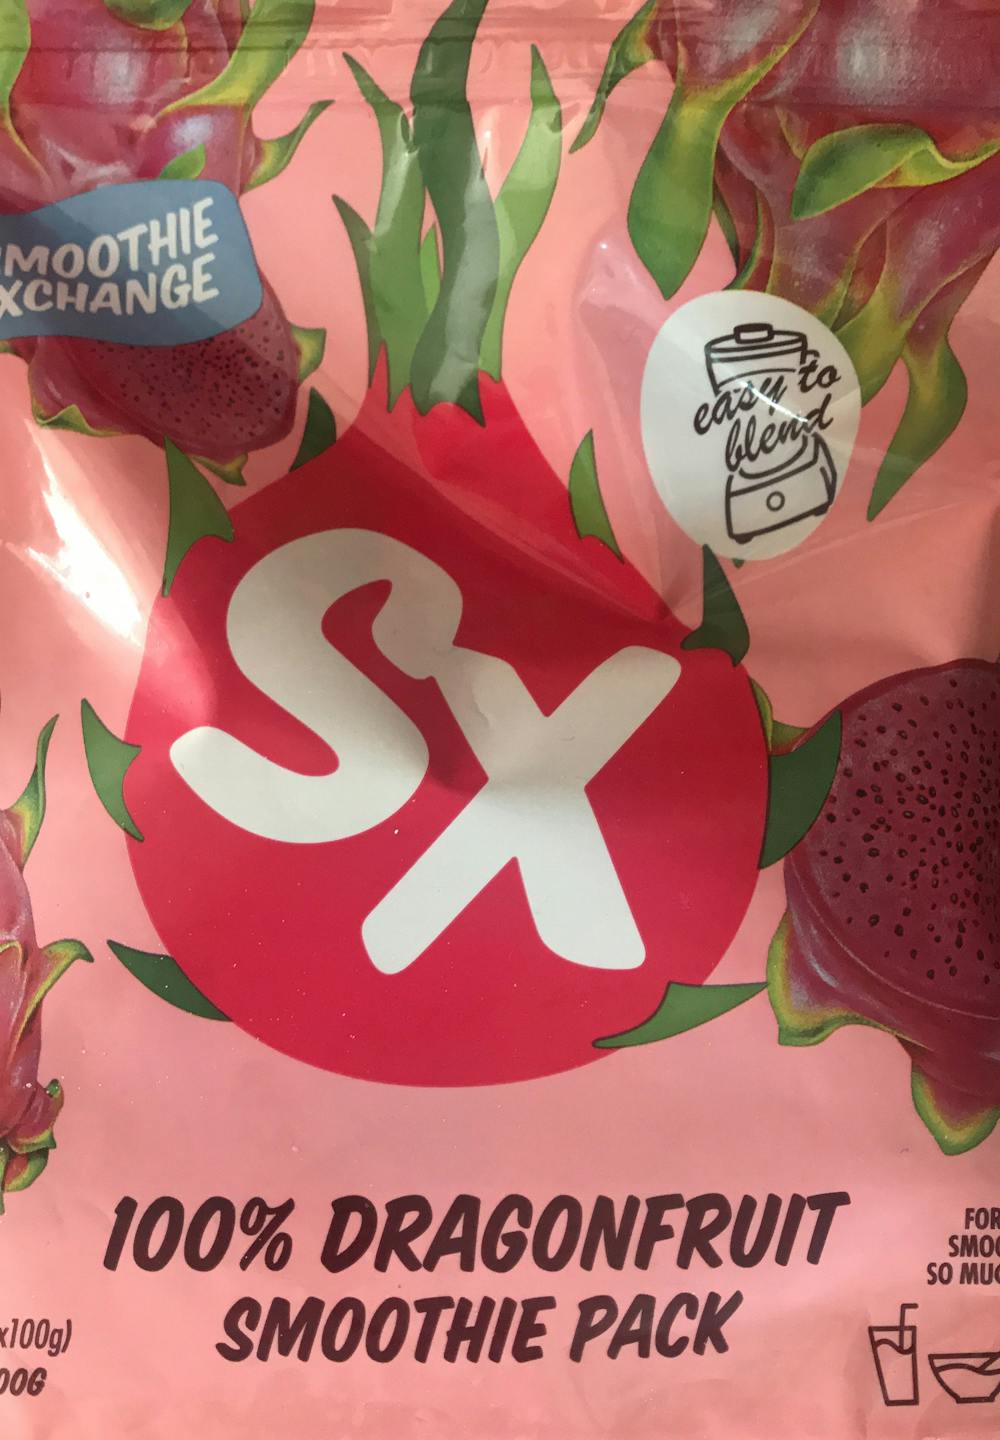 100% dragonfruit smoothie pack, Smoothie exchange